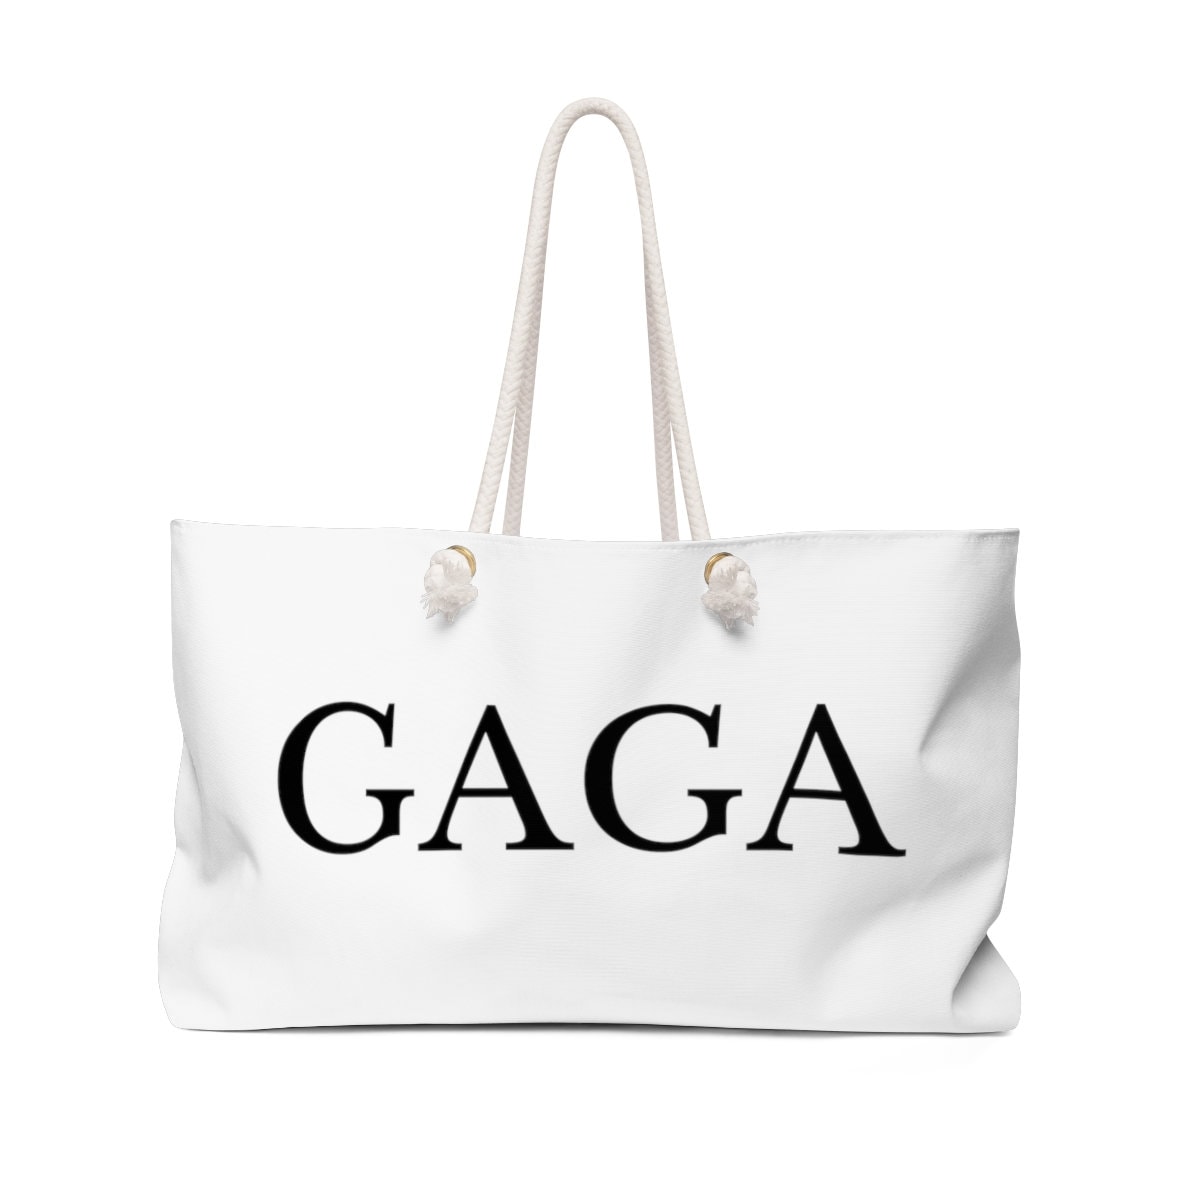 Buy Gaga Gift Gaga Makeup Bag Grandma Birthday Gift Mothers Day Gift for  Gaga (Gaga bag) Online at Lowest Price Ever in India | Check Reviews &  Ratings - Shop The World